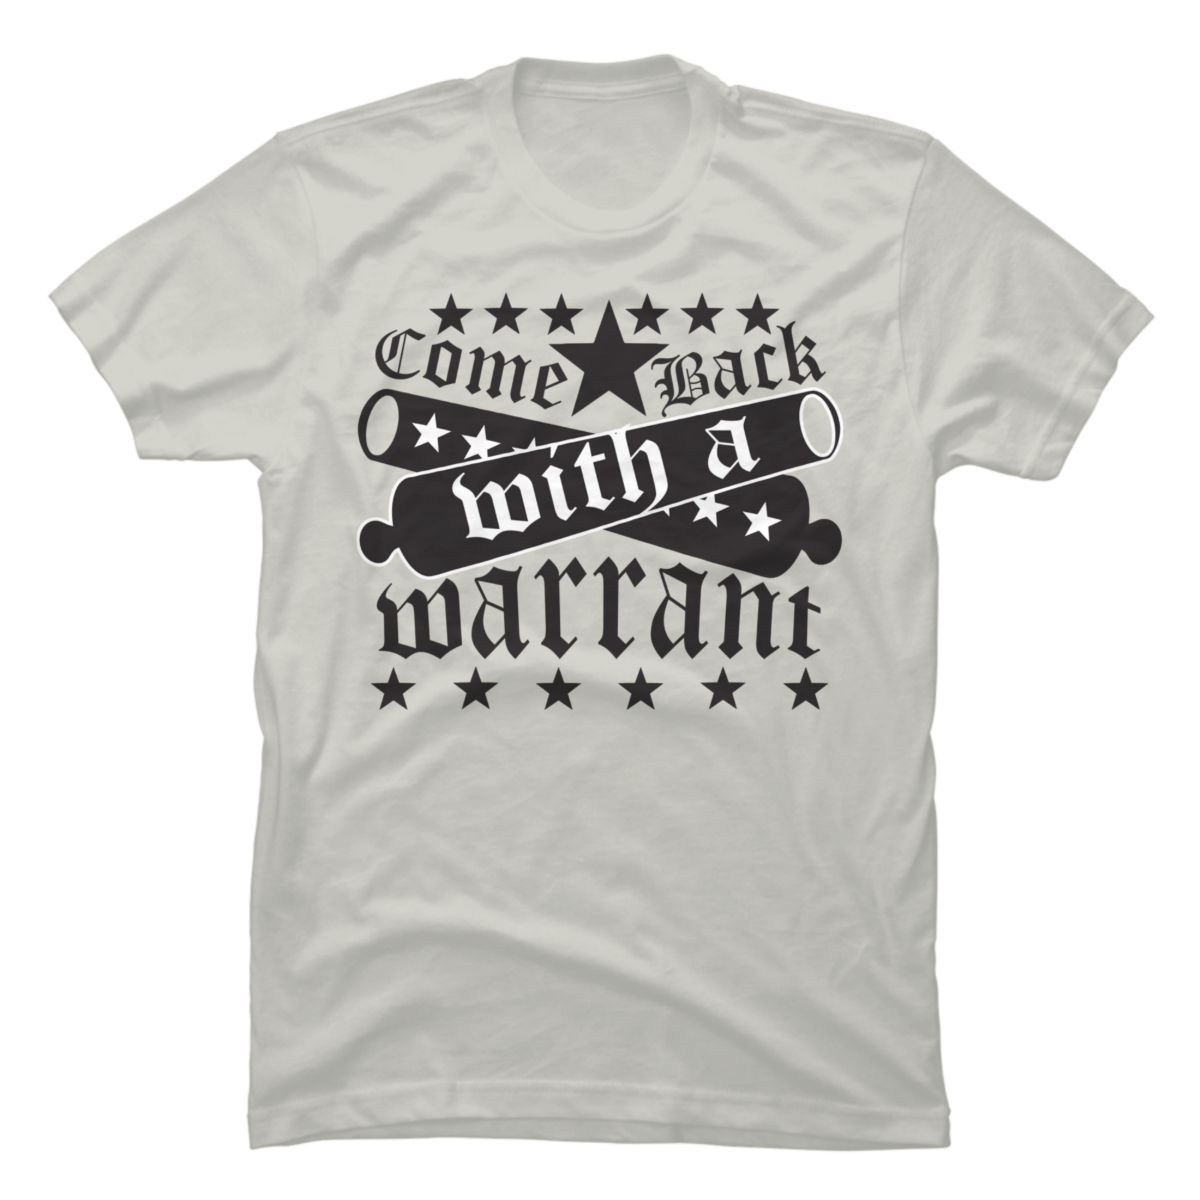 warrant shirts